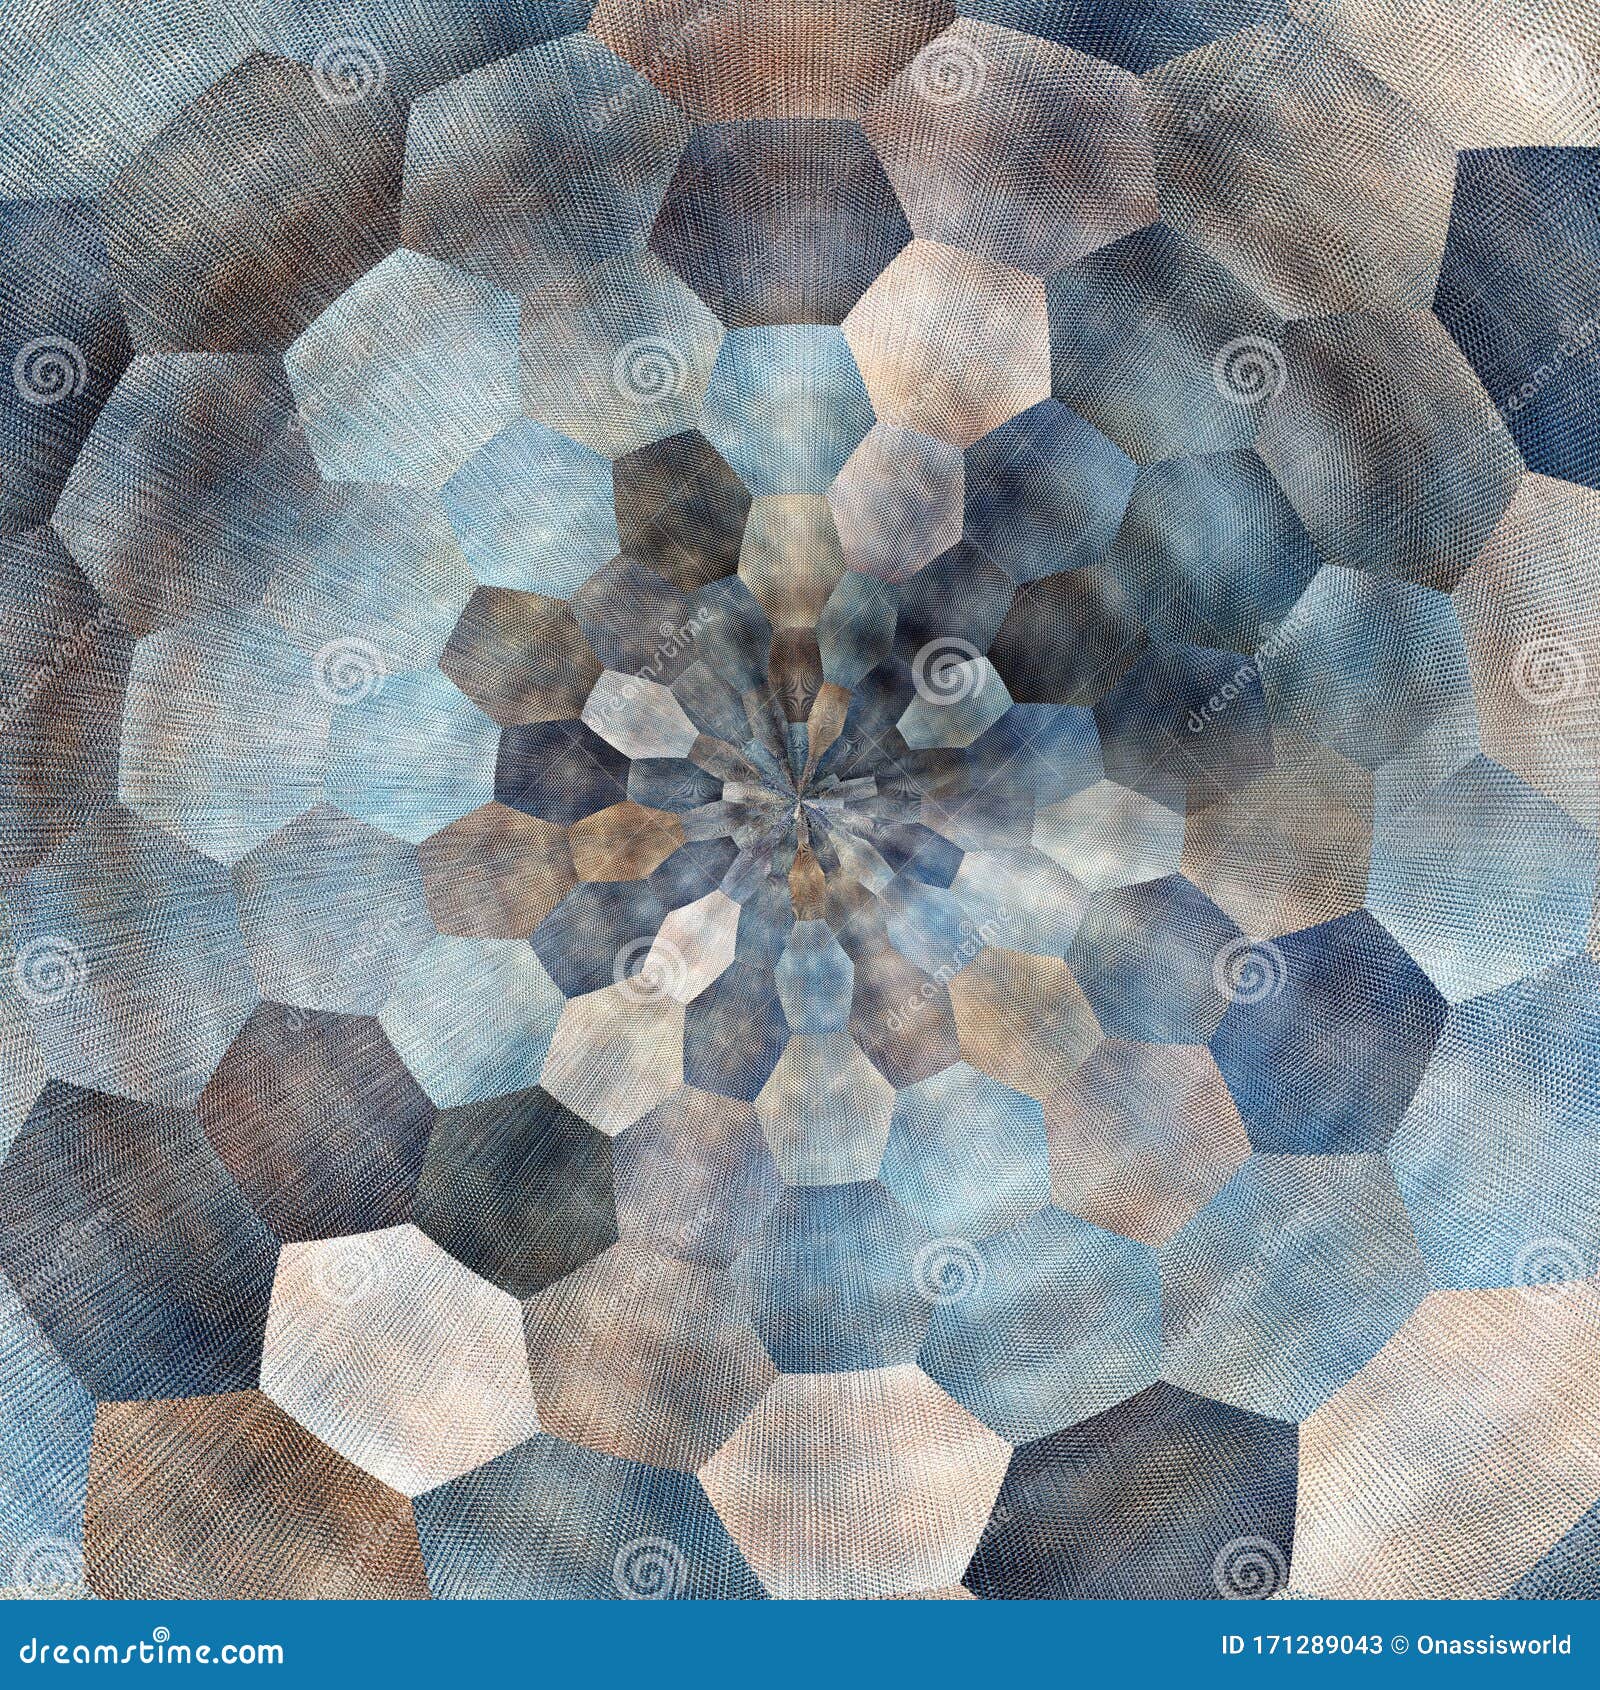 material closeup abstract background digital artwork